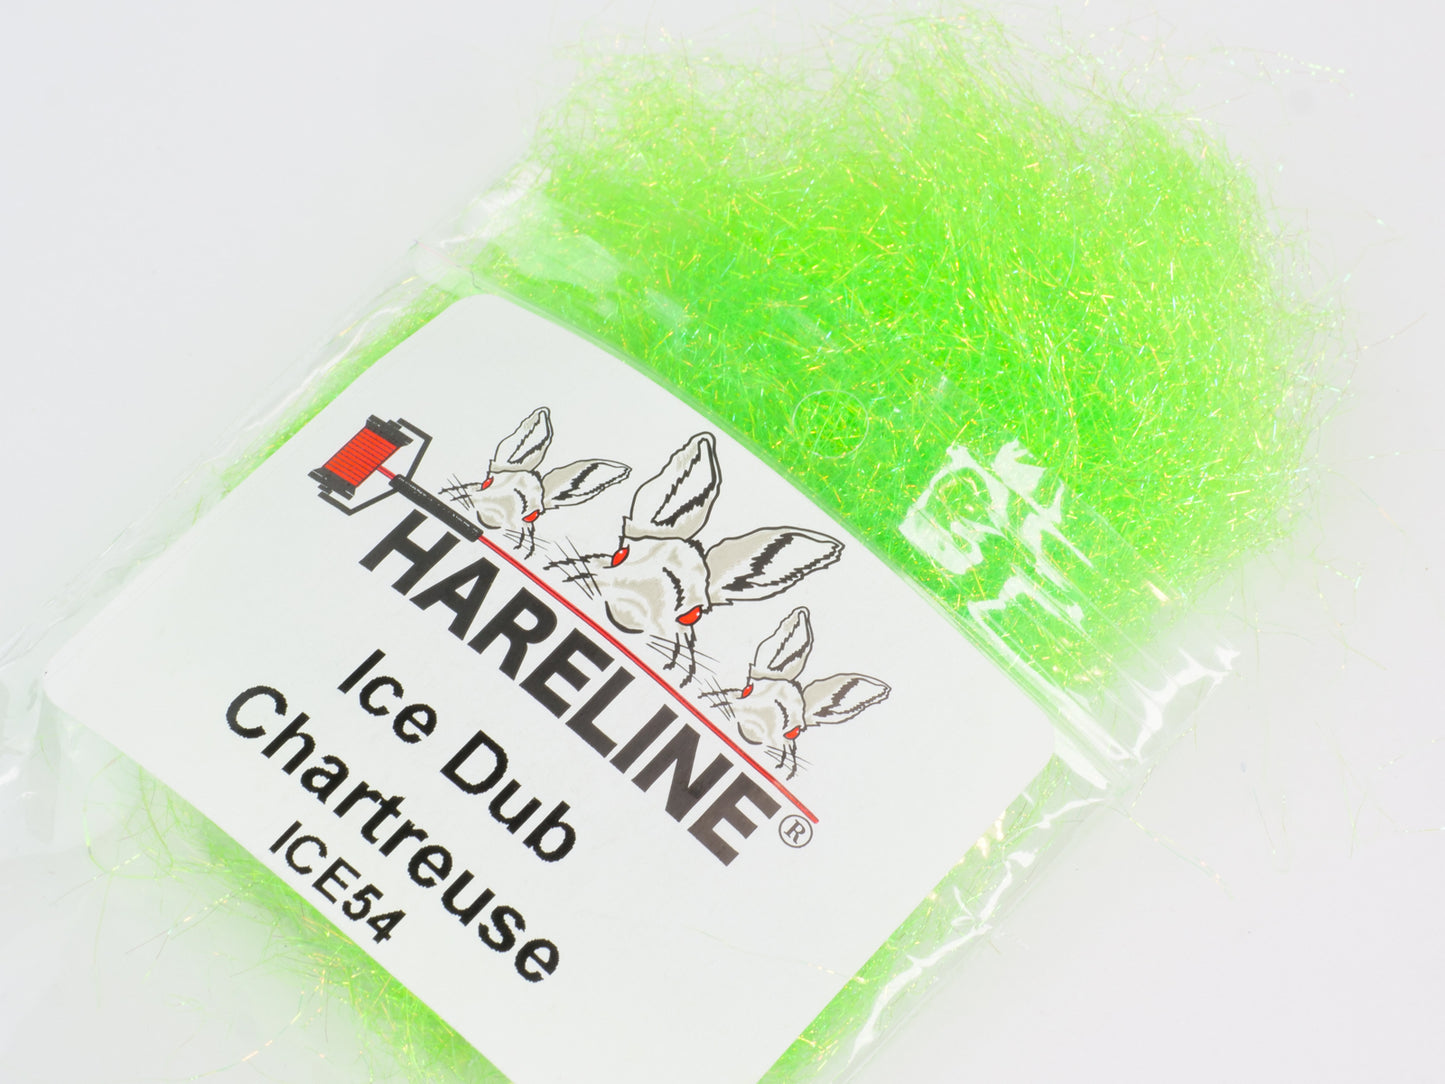 Hareline Ice Dubbing